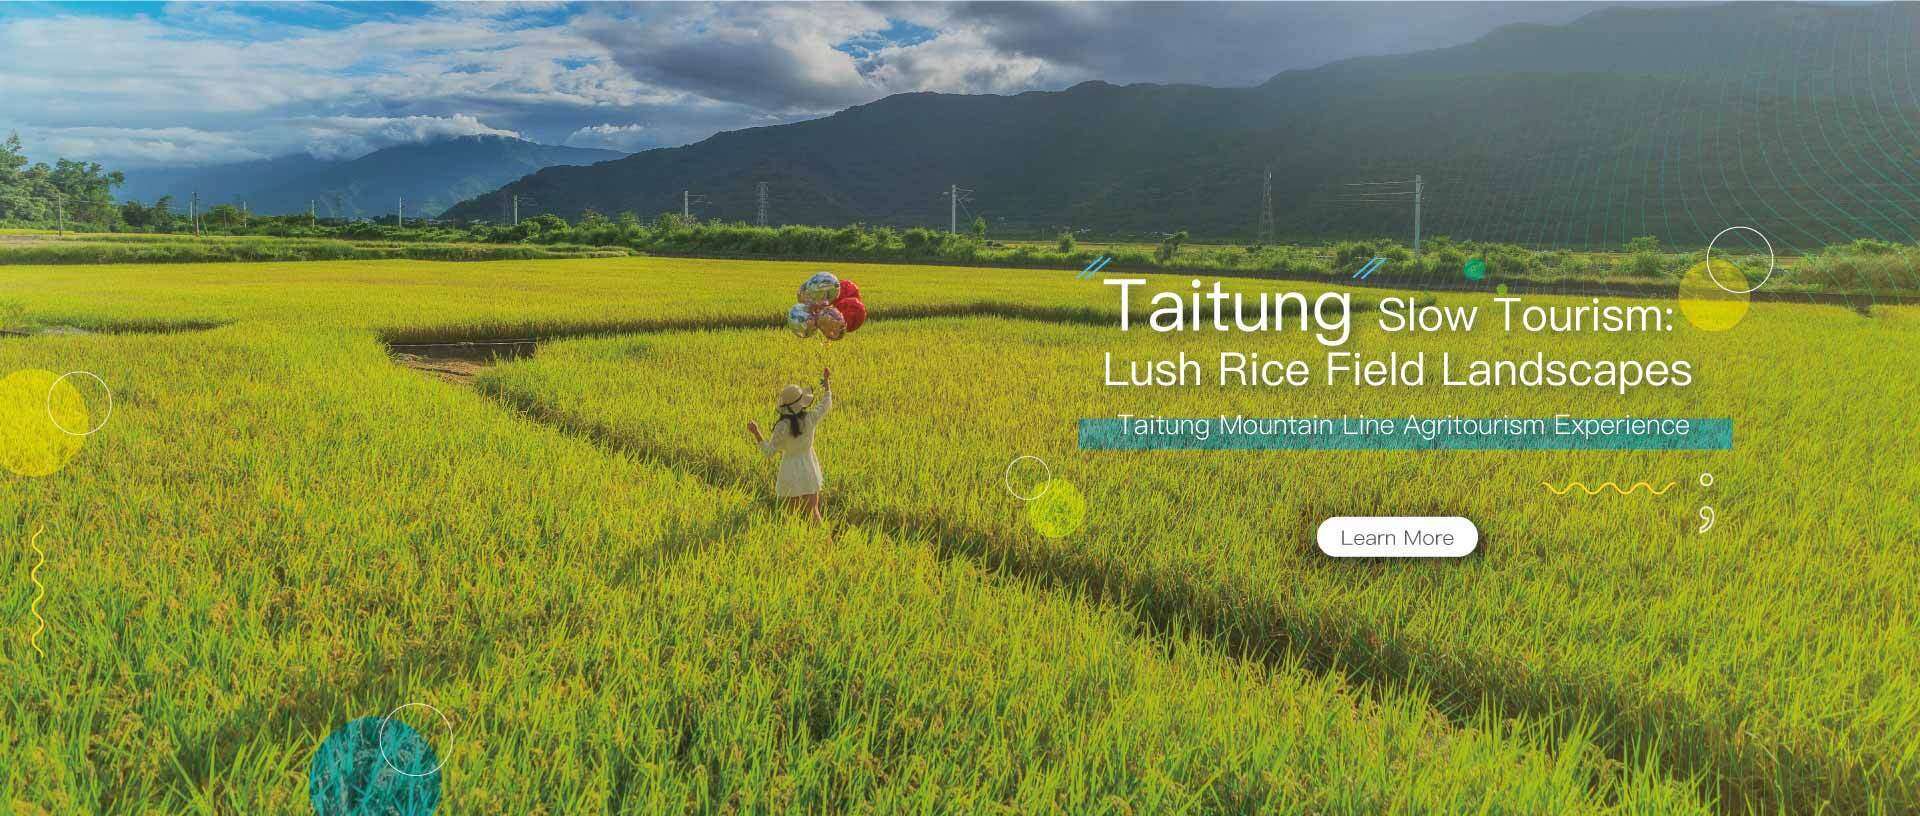 Taitung slow Tourism:Lush Rice Field Landscapes